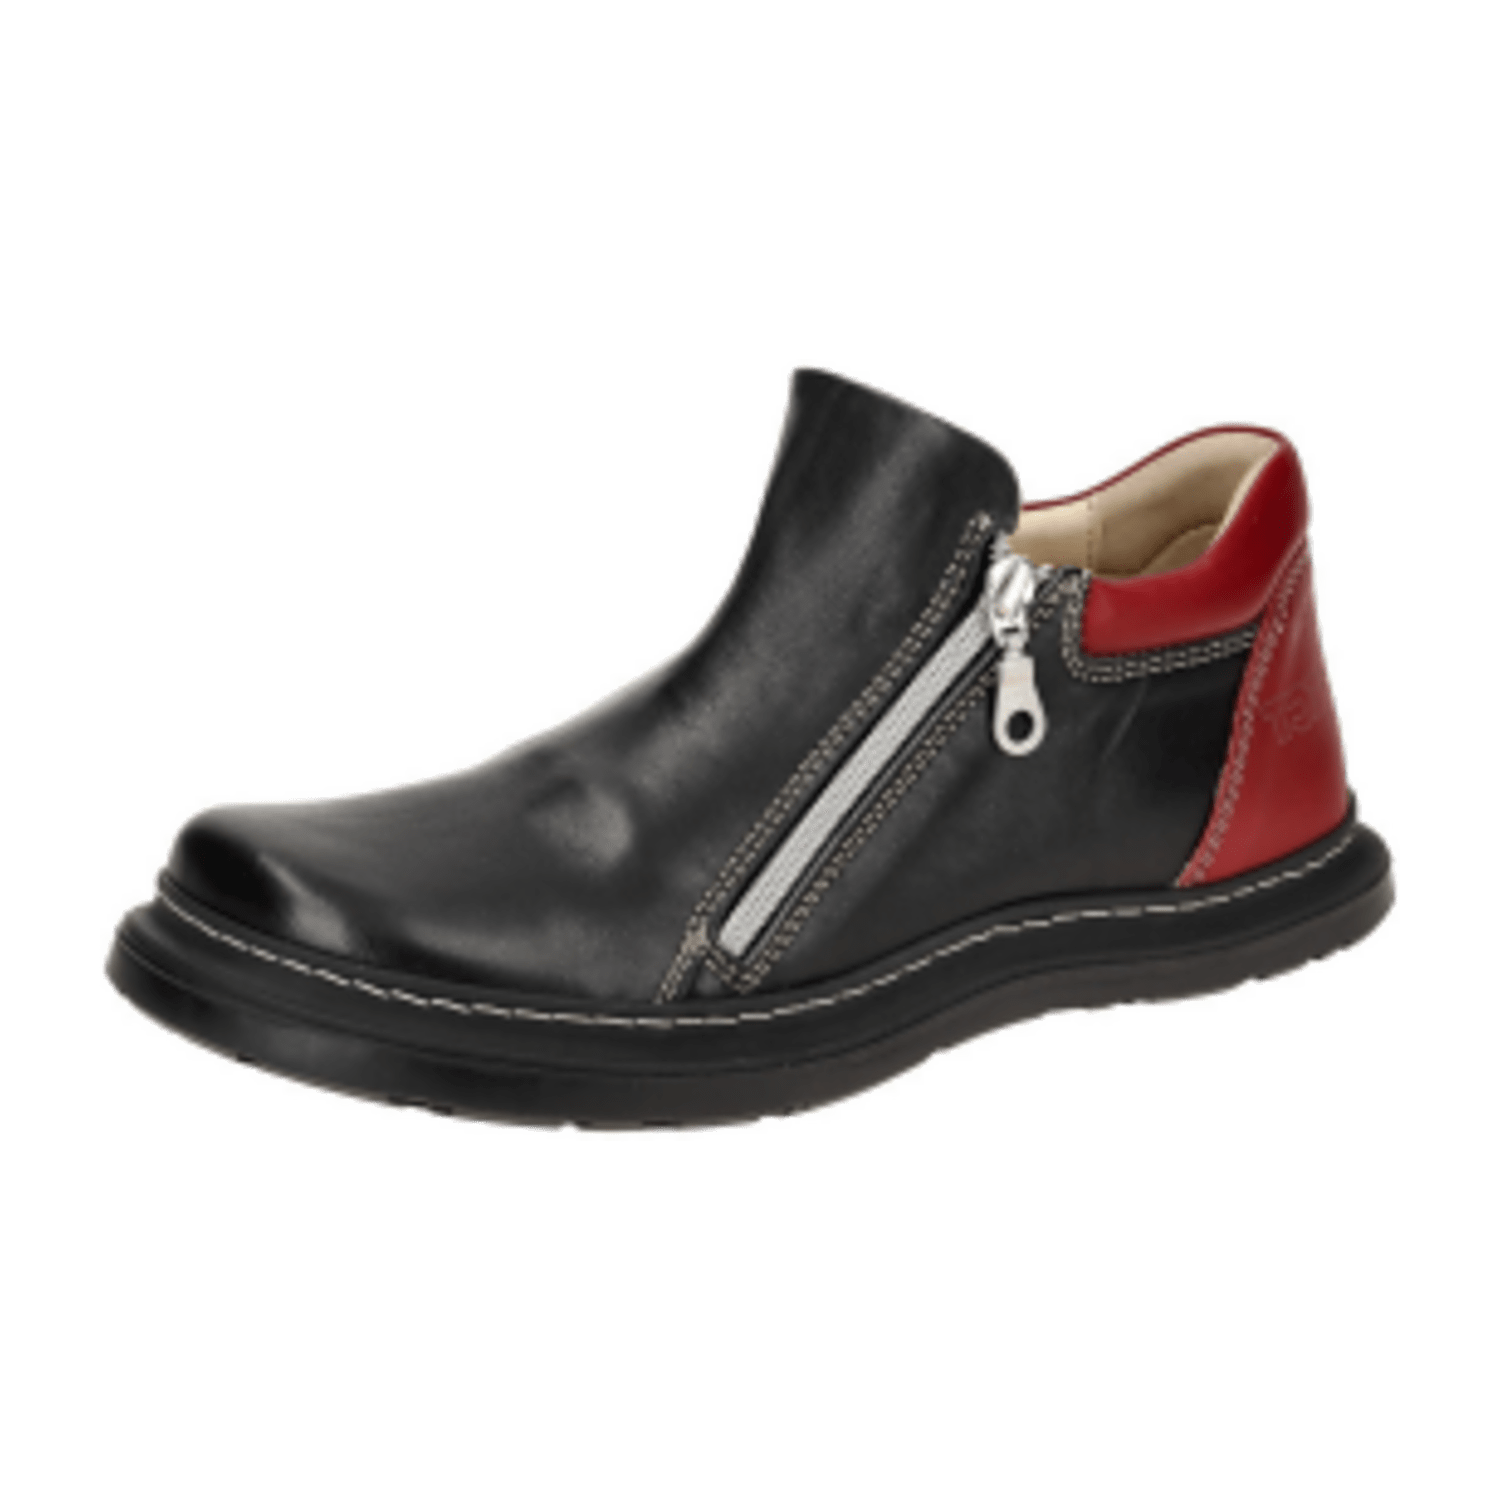 Eject Sony2 Schuhe schwarz rot 20712